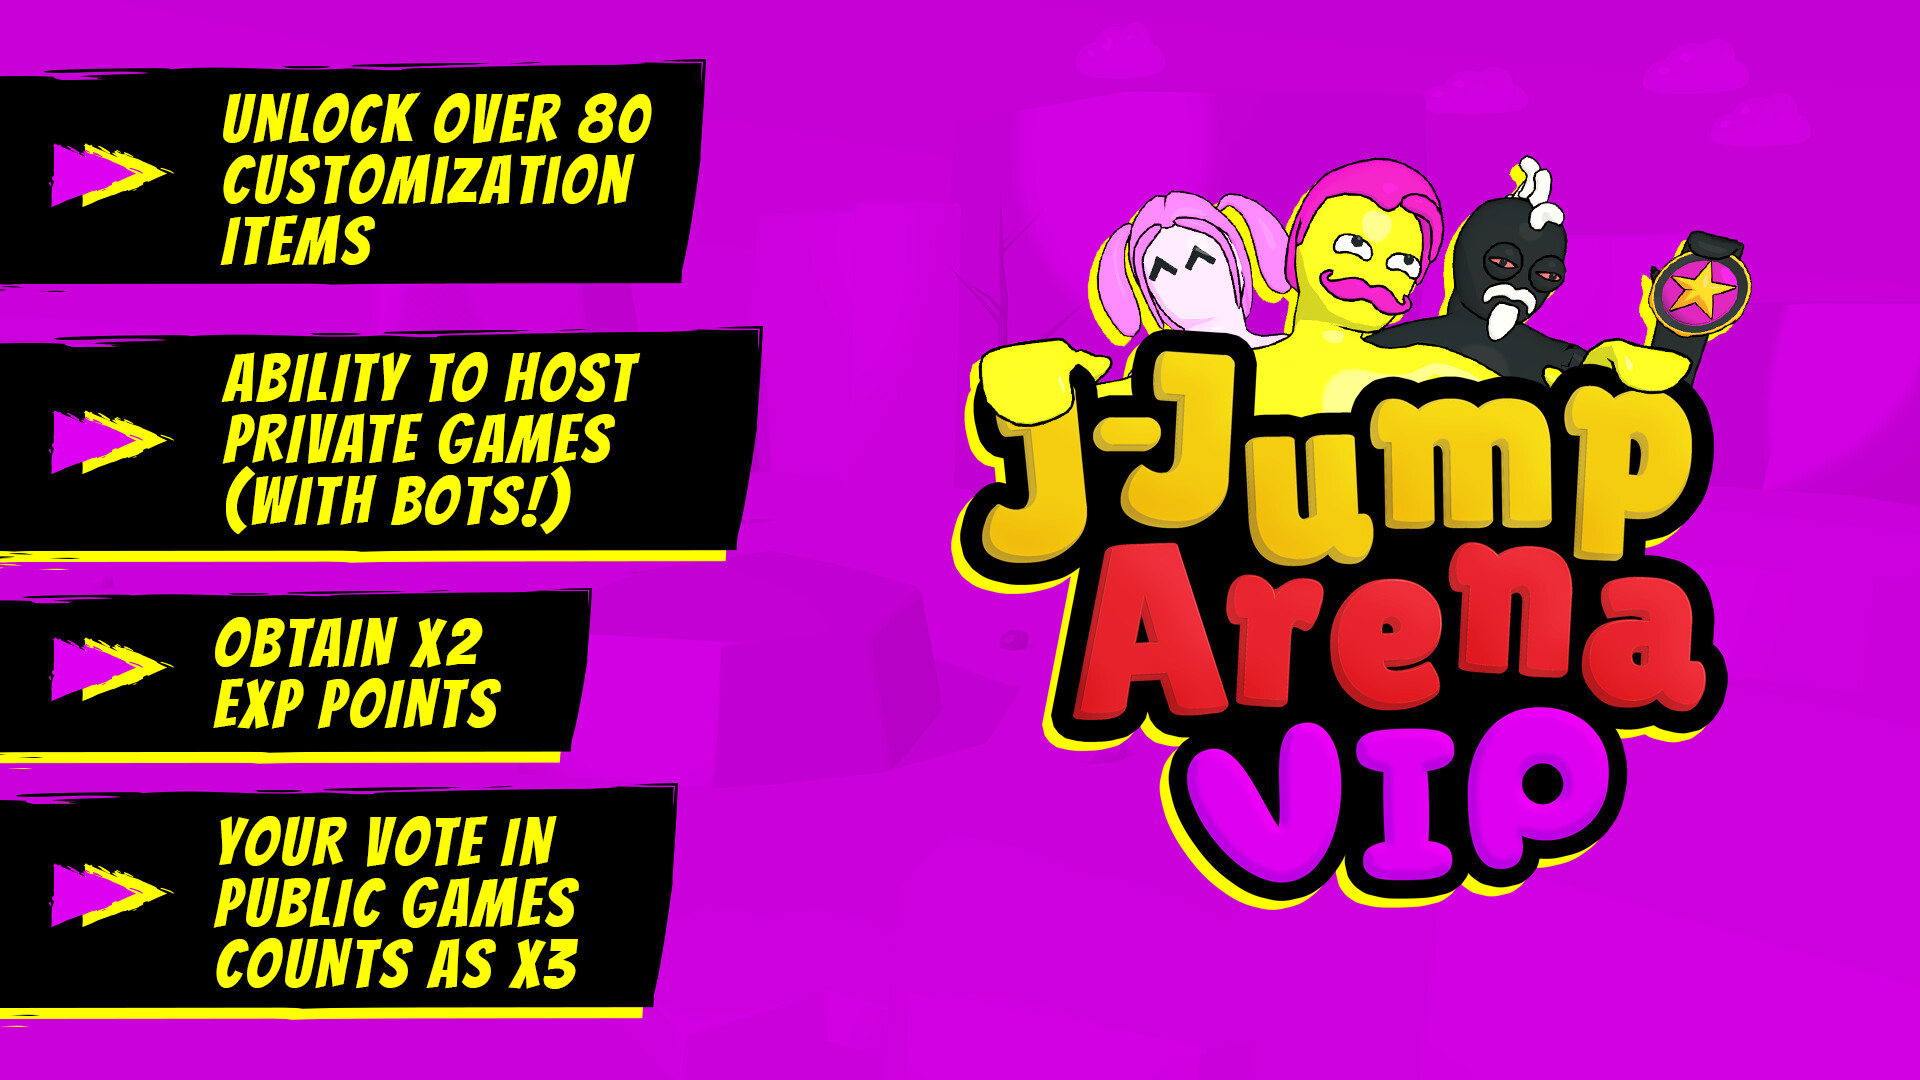 J-Jump Arena - VIP Upgrade DLC Steam CD Key 3.38 $